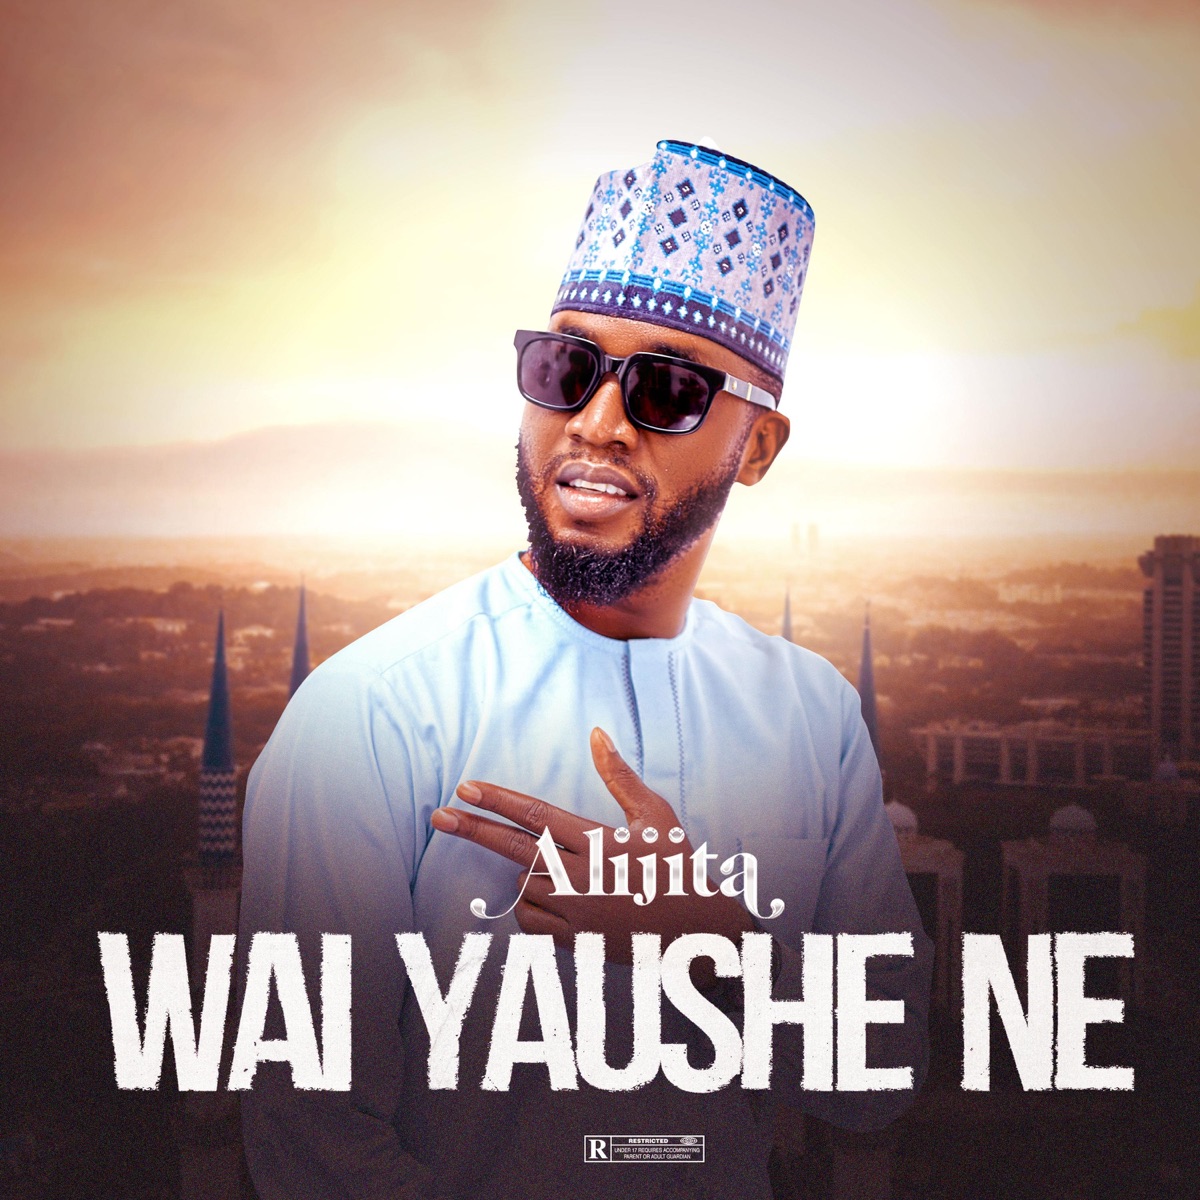 ‎Wai Yaushe Ne - Single - Album by Ali Jita - Apple Music